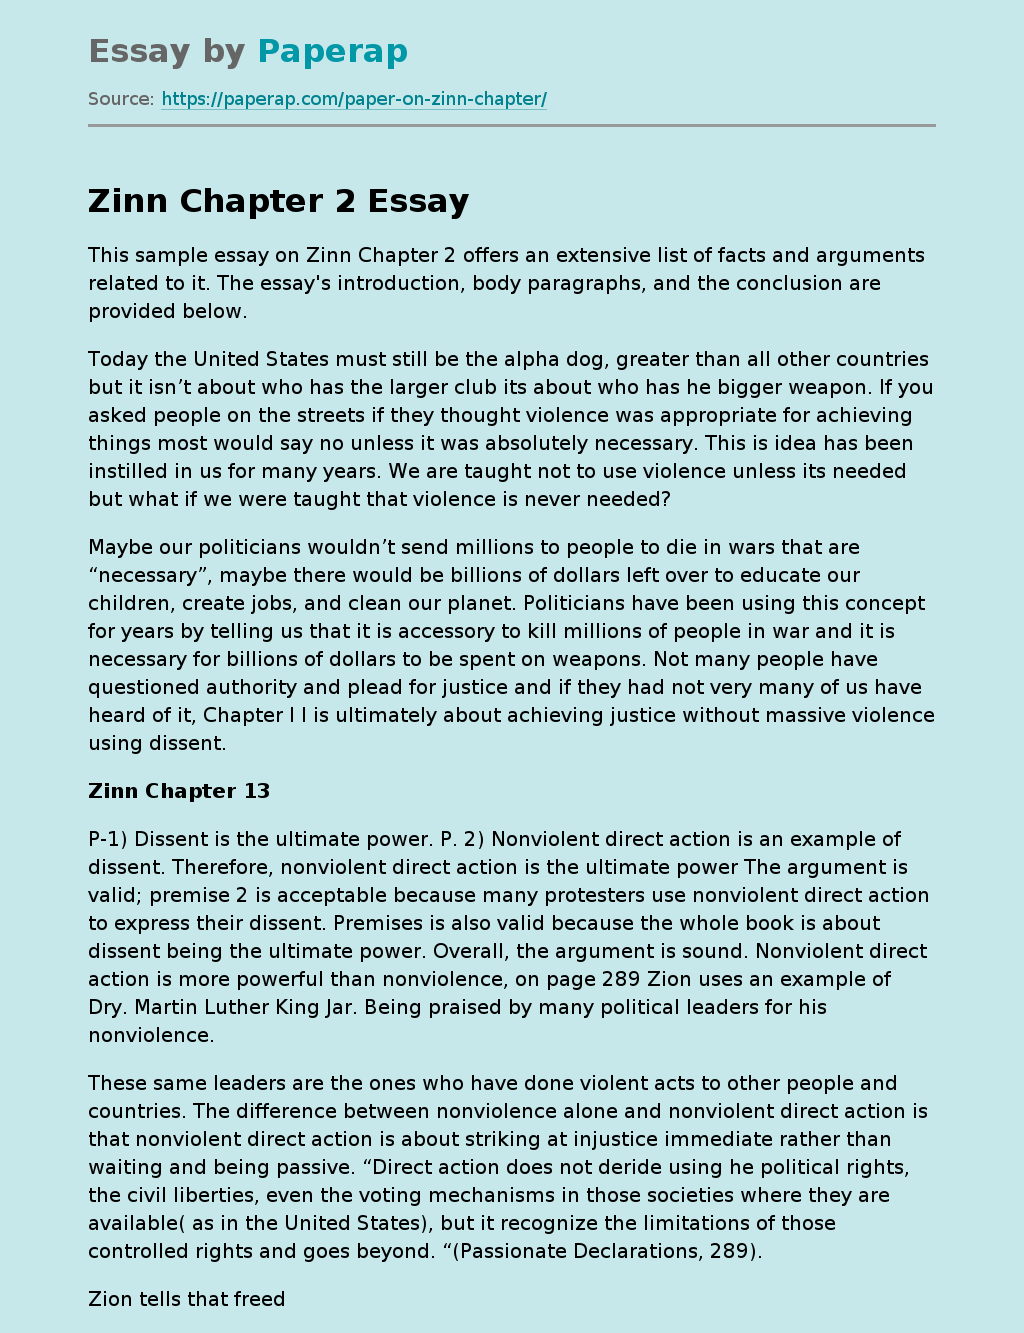 Sample Essay on Zinn Chapter 2